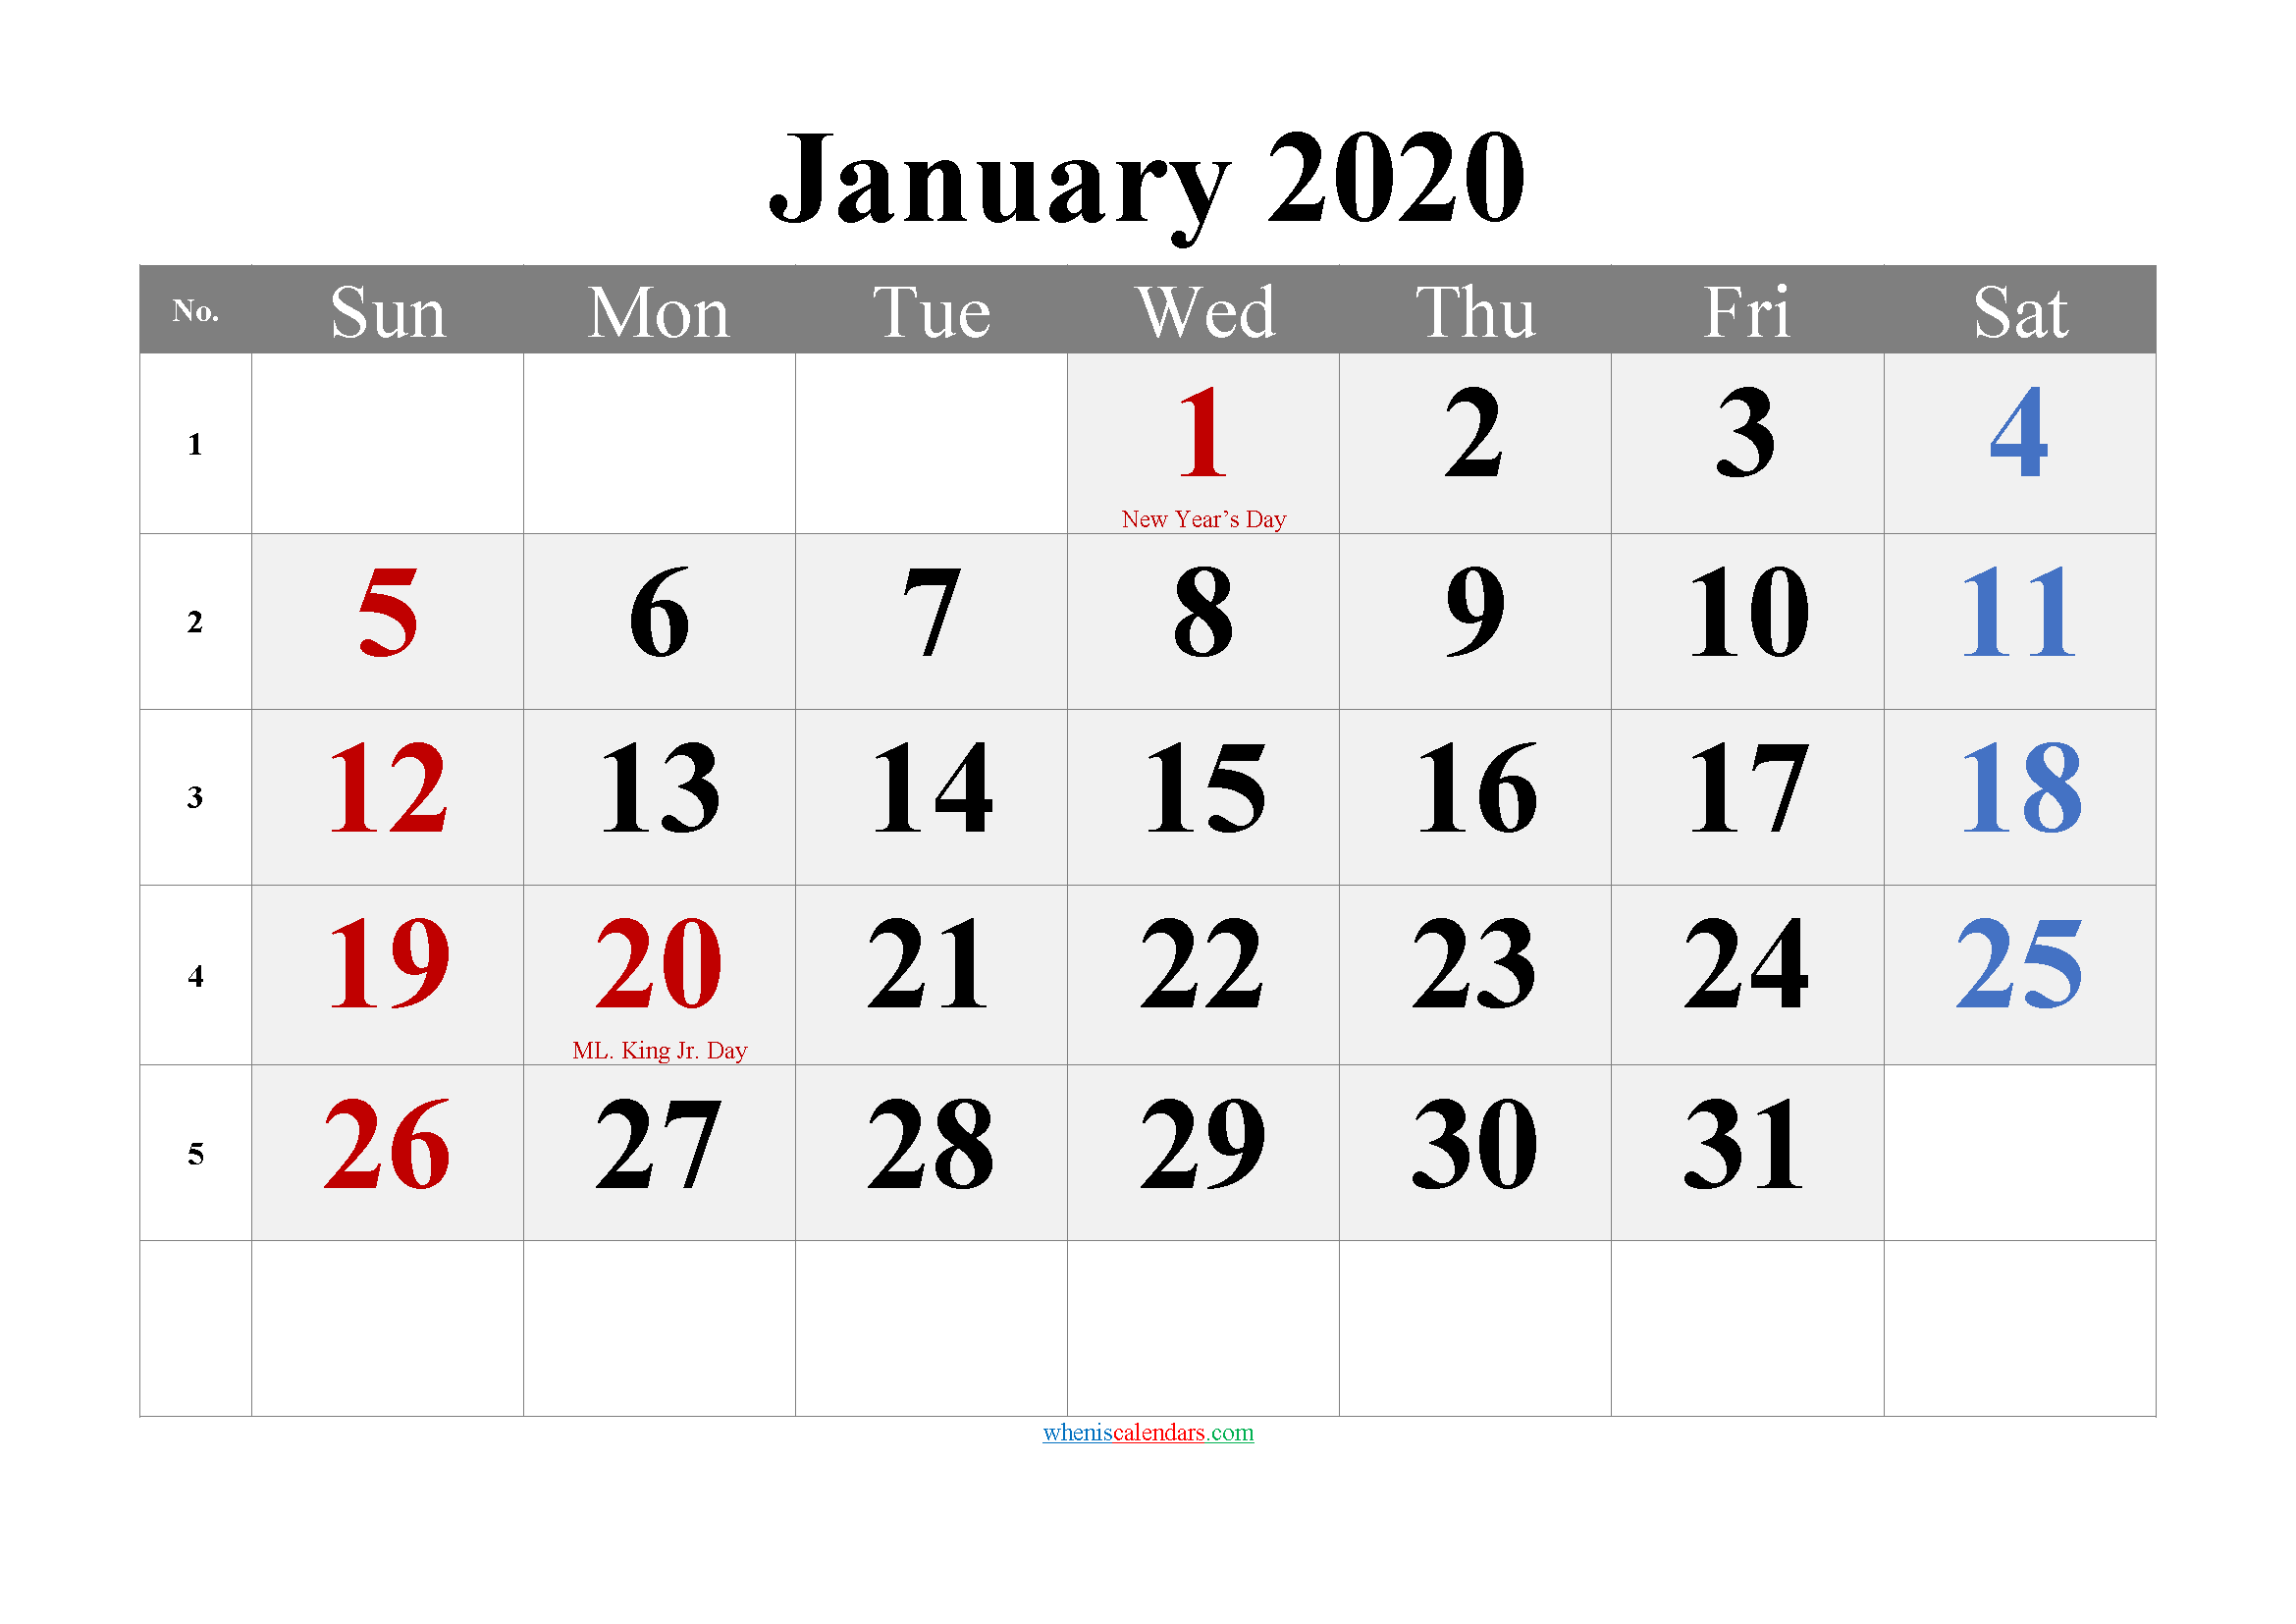 JANUARY 2020 Printable Calendar with Holidays